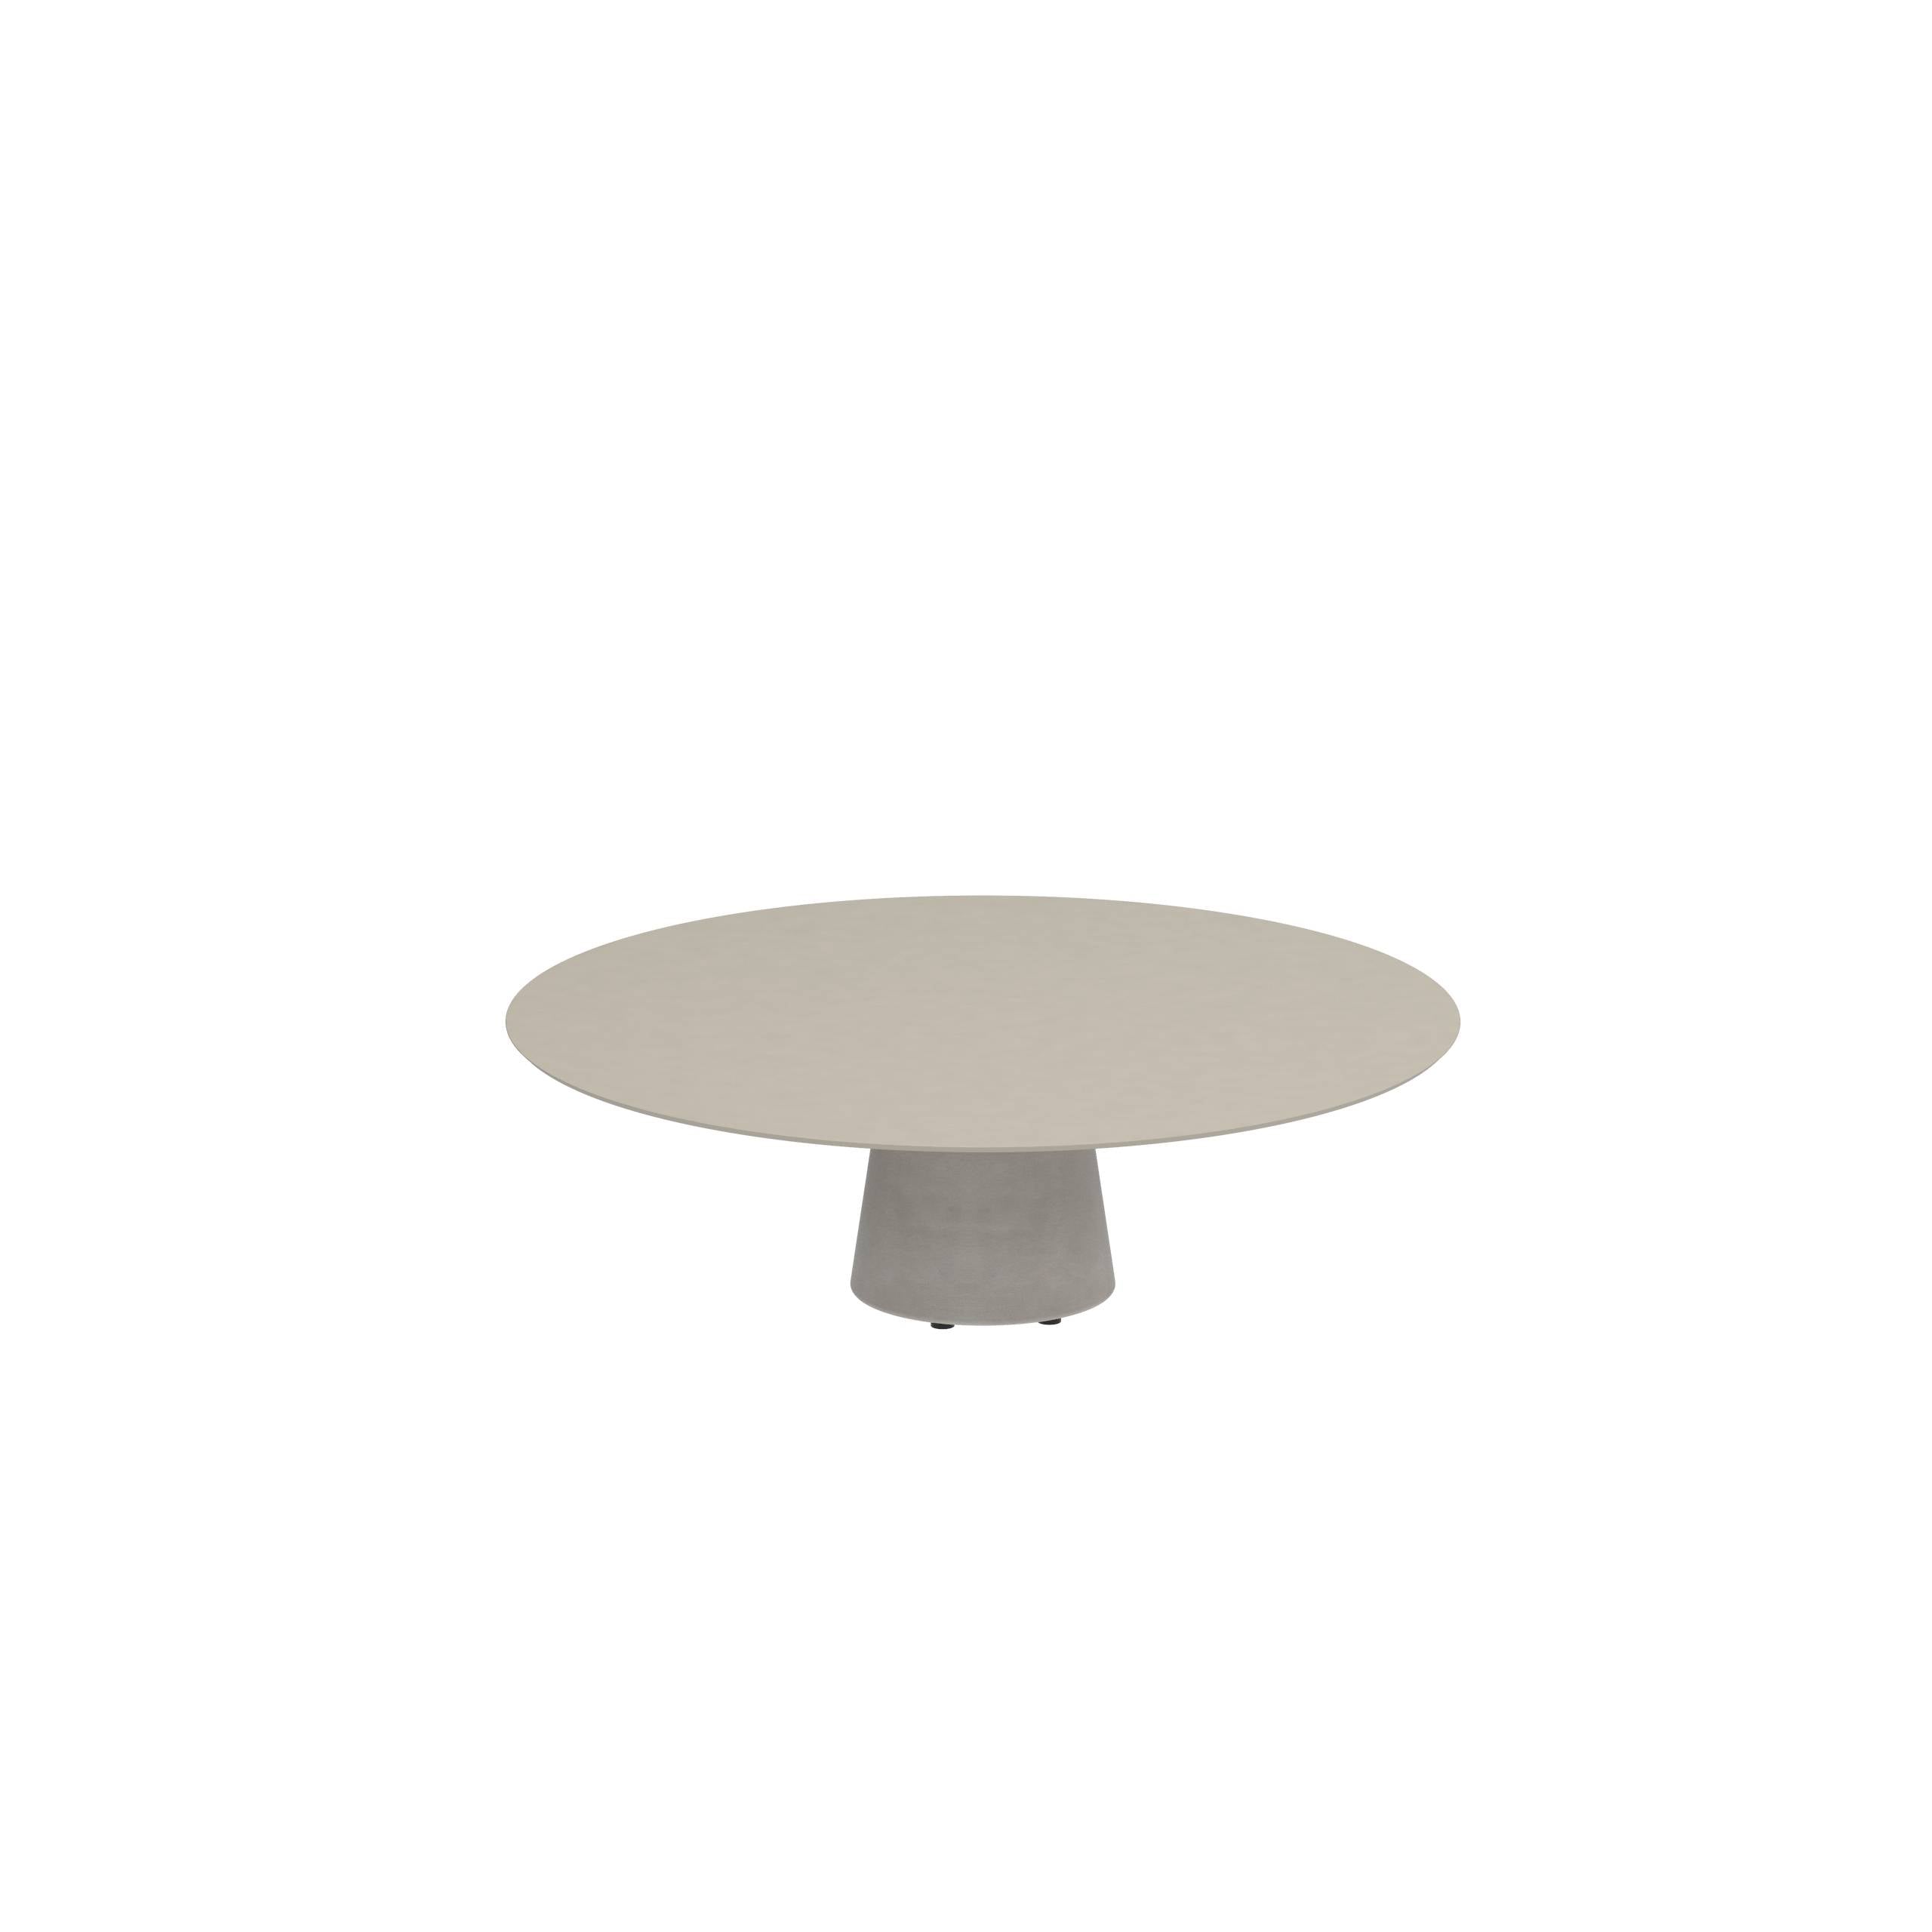 Conix Table Round Ø 160cm High Lounge Leg Concrete Cement Grey - Tabletop Ceramic Pearl Grey